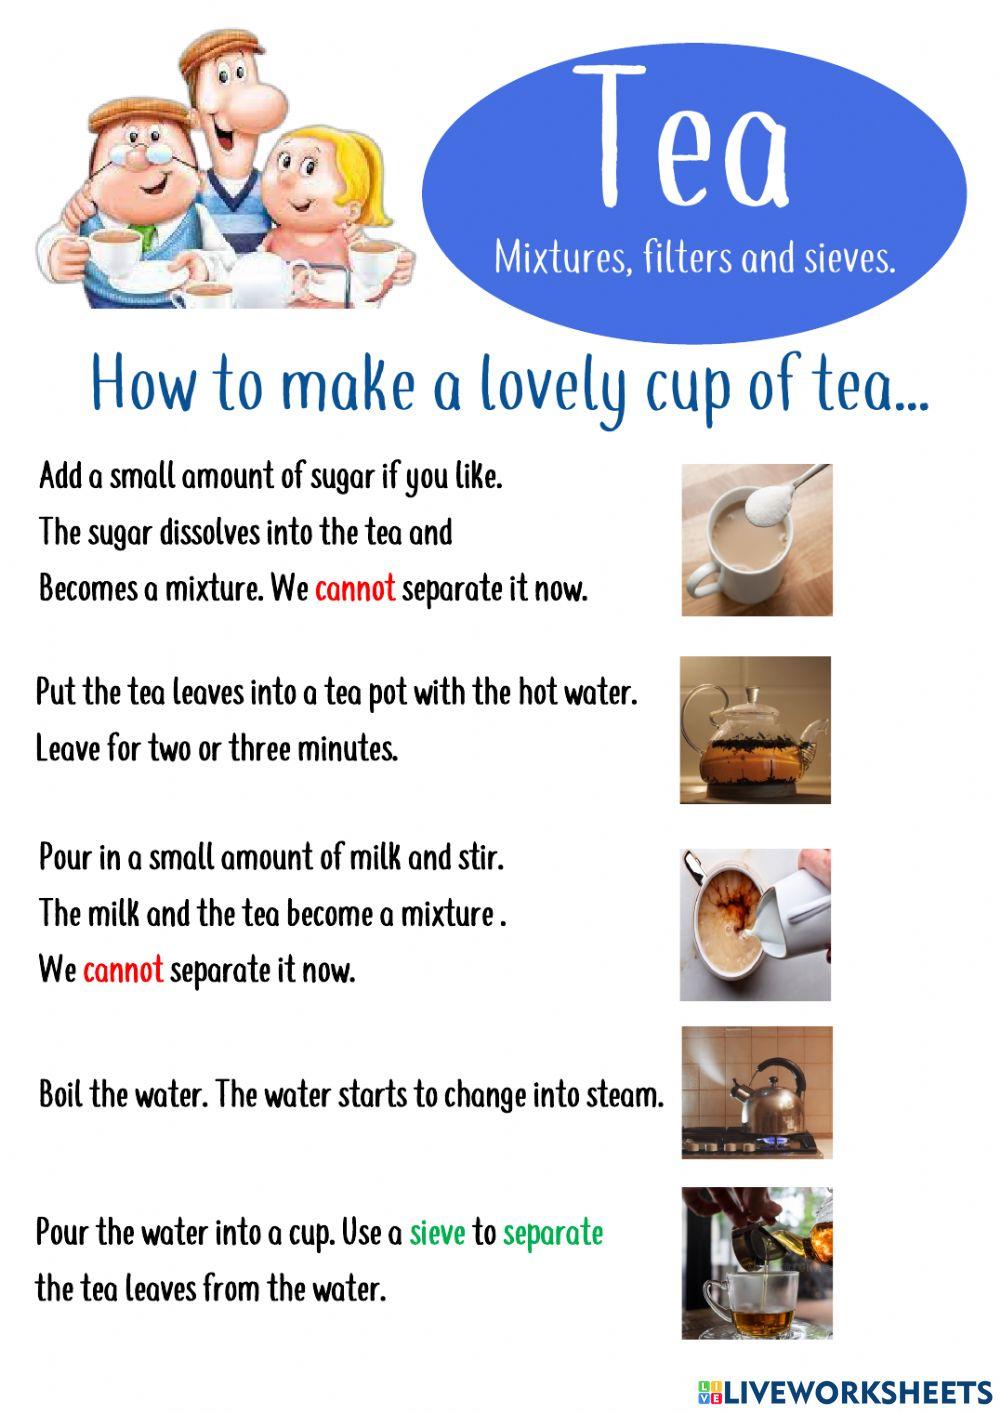 Tea - Mixtures and filters